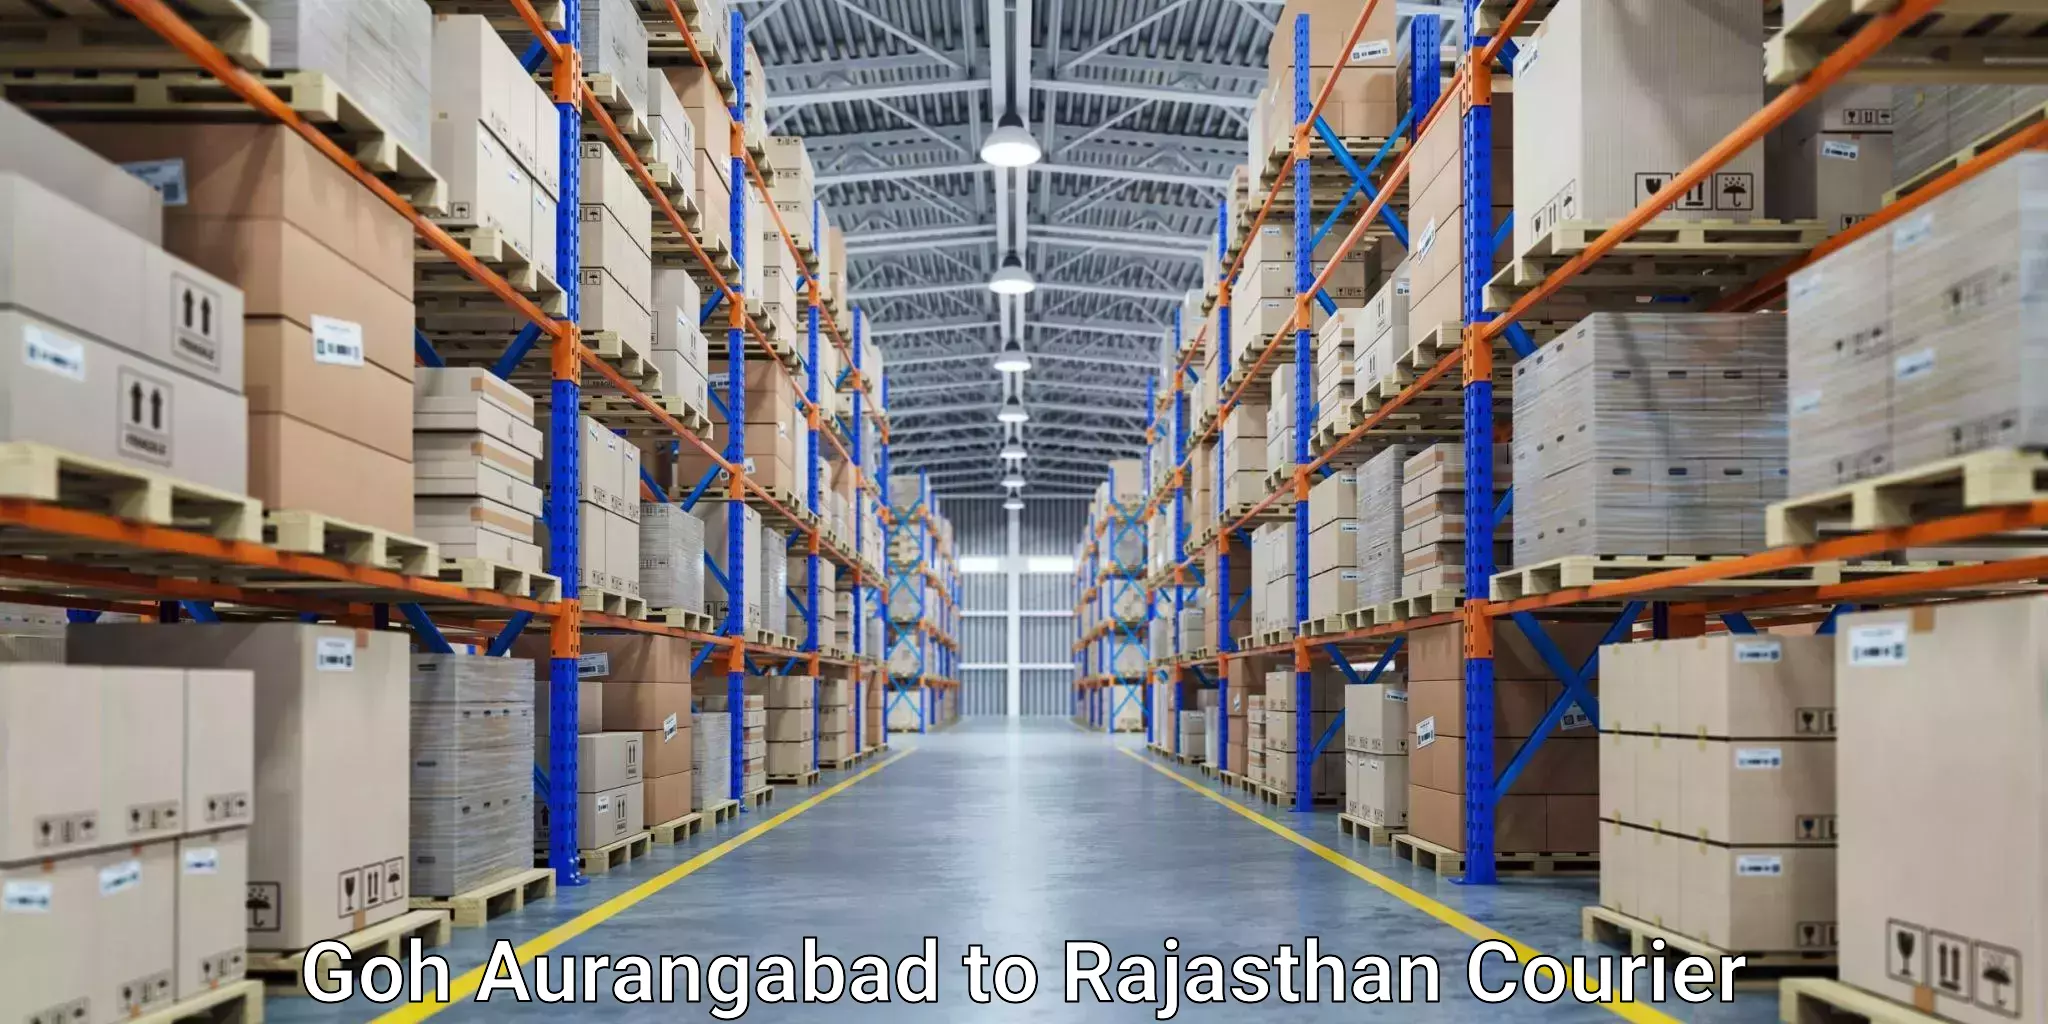 Logistics and distribution Goh Aurangabad to Yeswanthapur